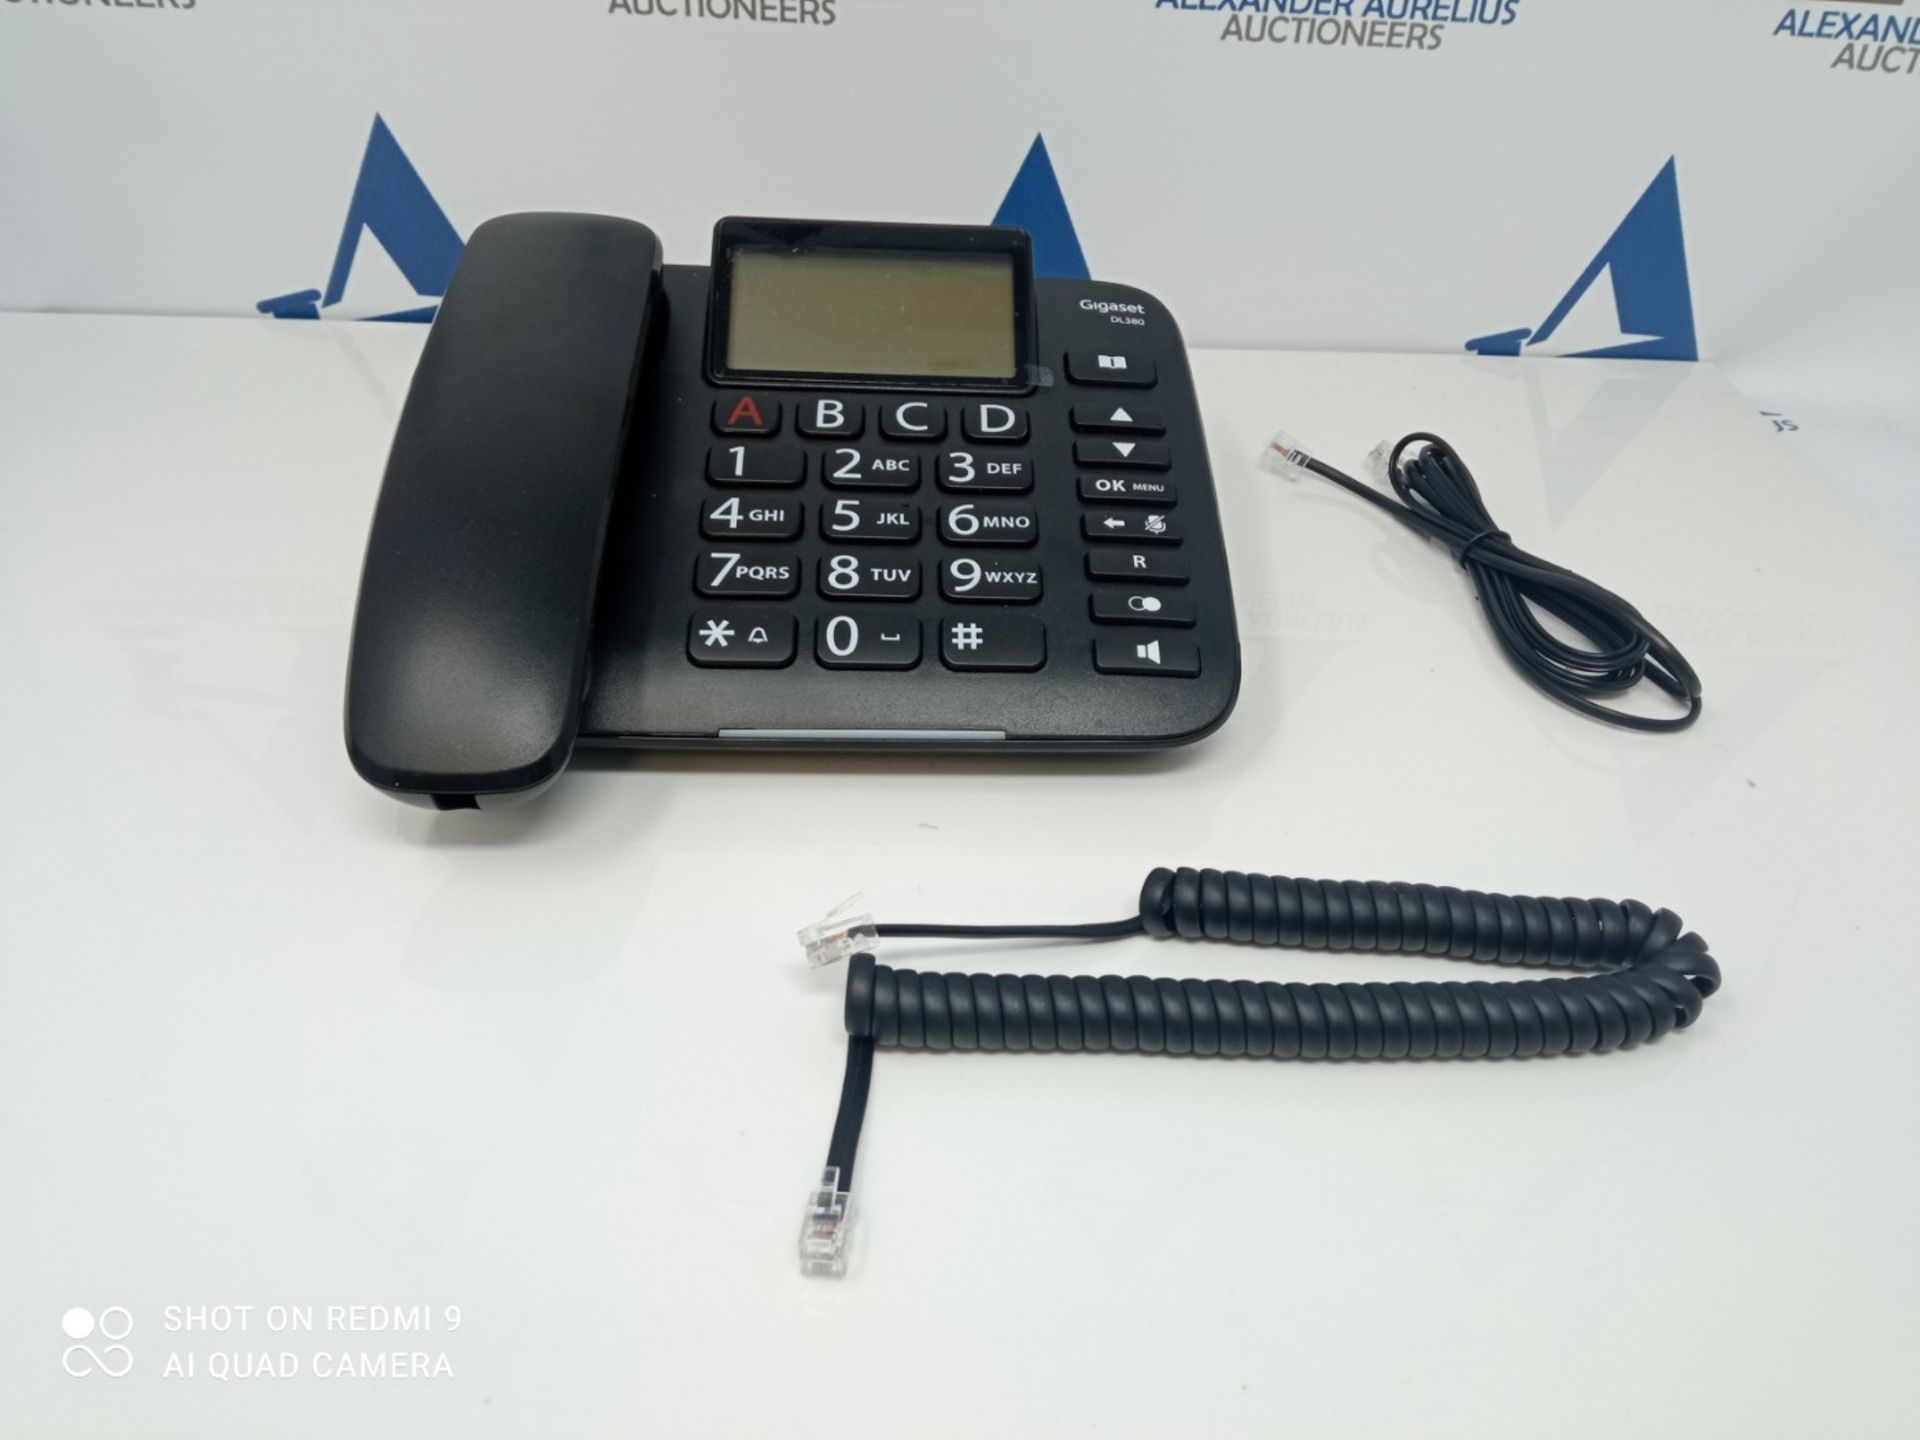 Gigaset DL380 Landline Telephone, Large Display, Large Ergonomic Keys, Call Display vi - Image 3 of 3